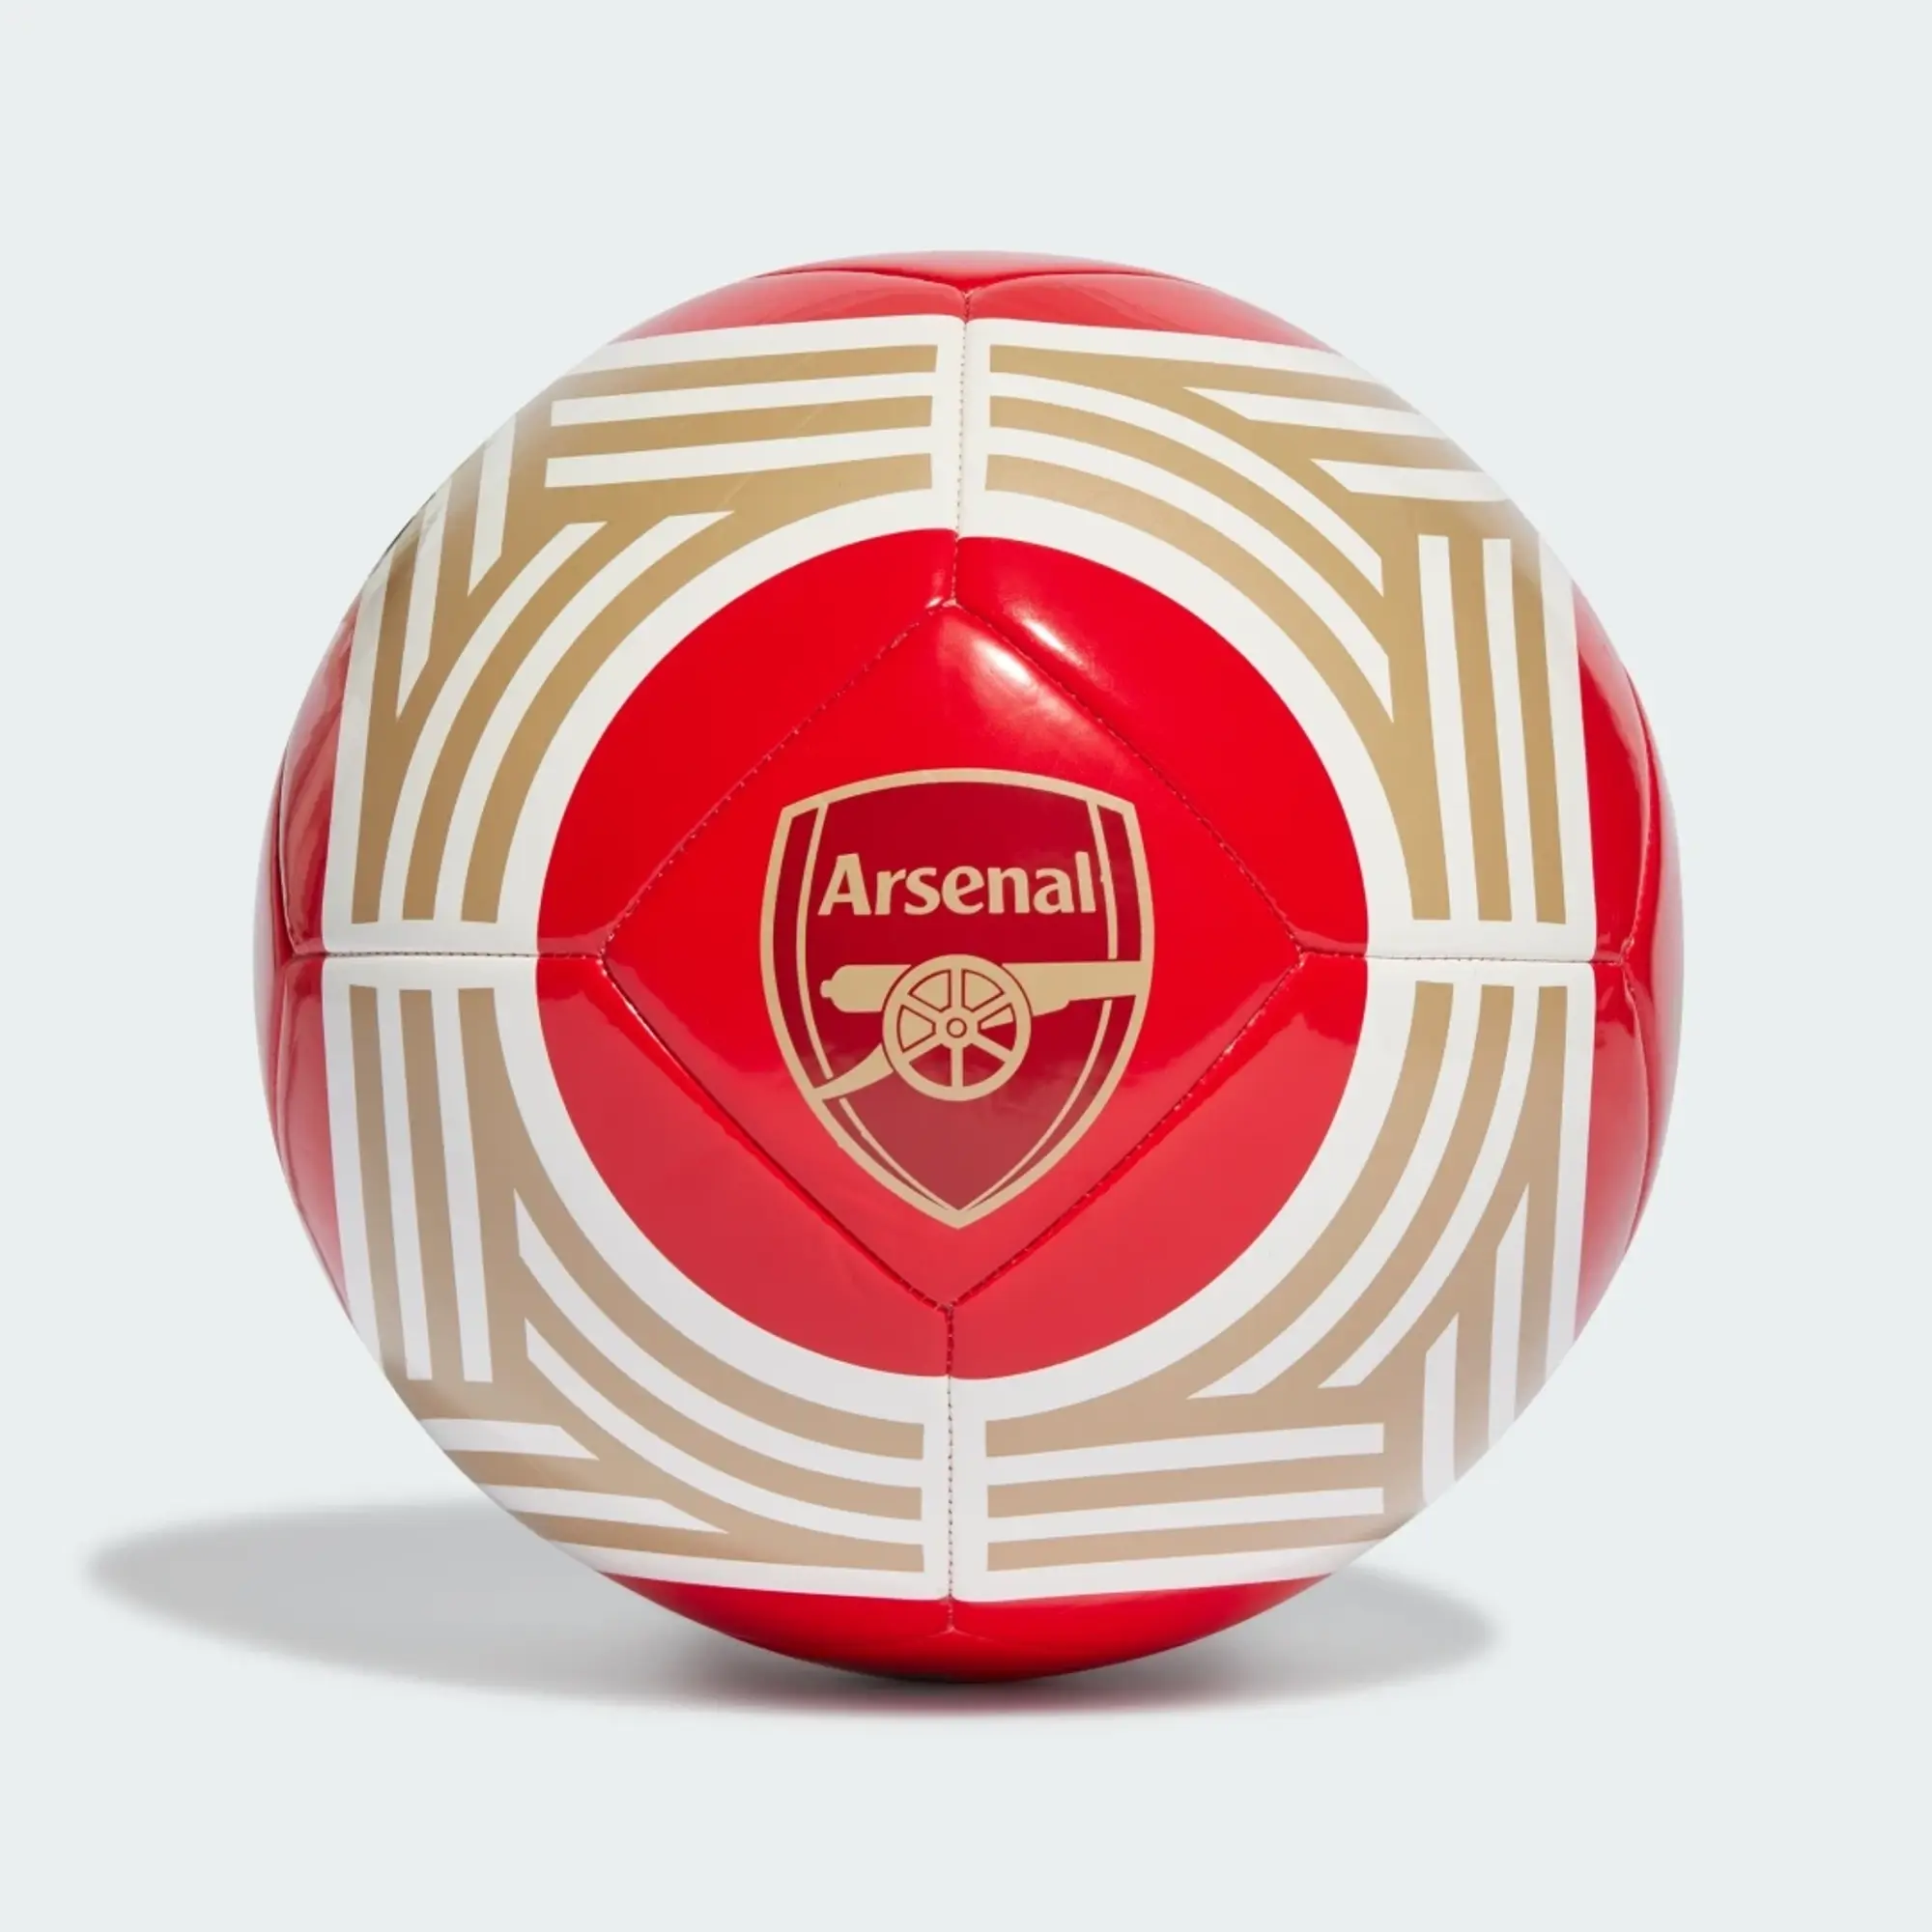 adidas Arsenal Home Club Ball